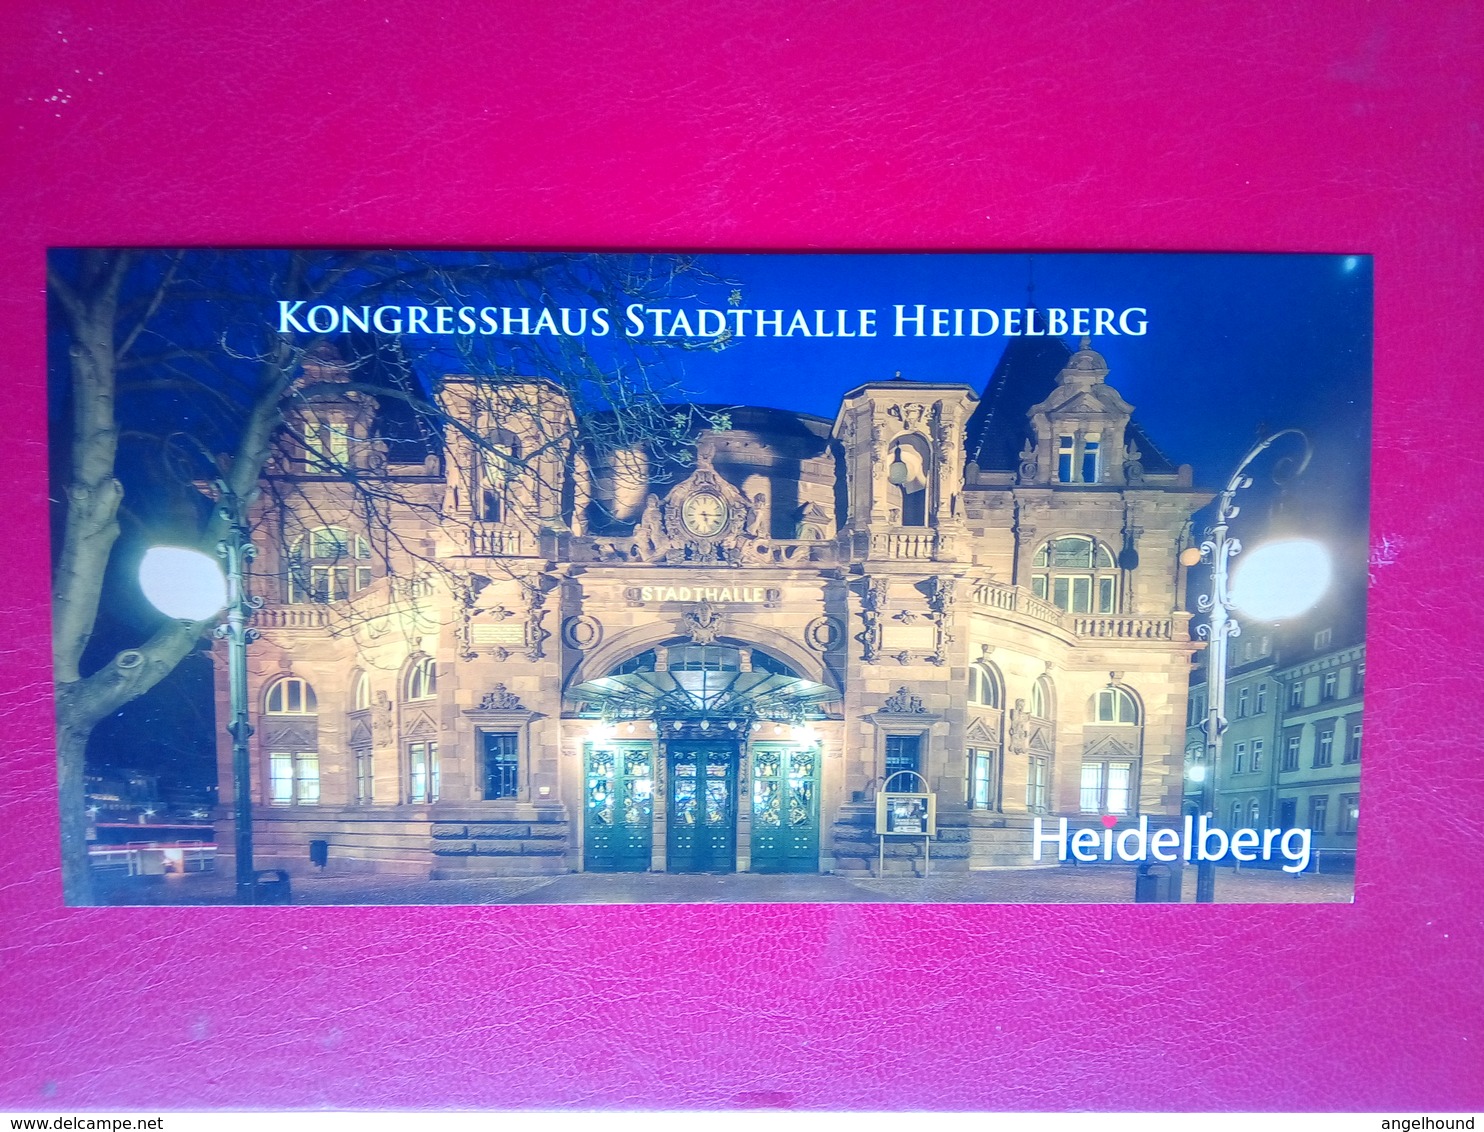 Kongesshaus Stadthalle - Heidelberg